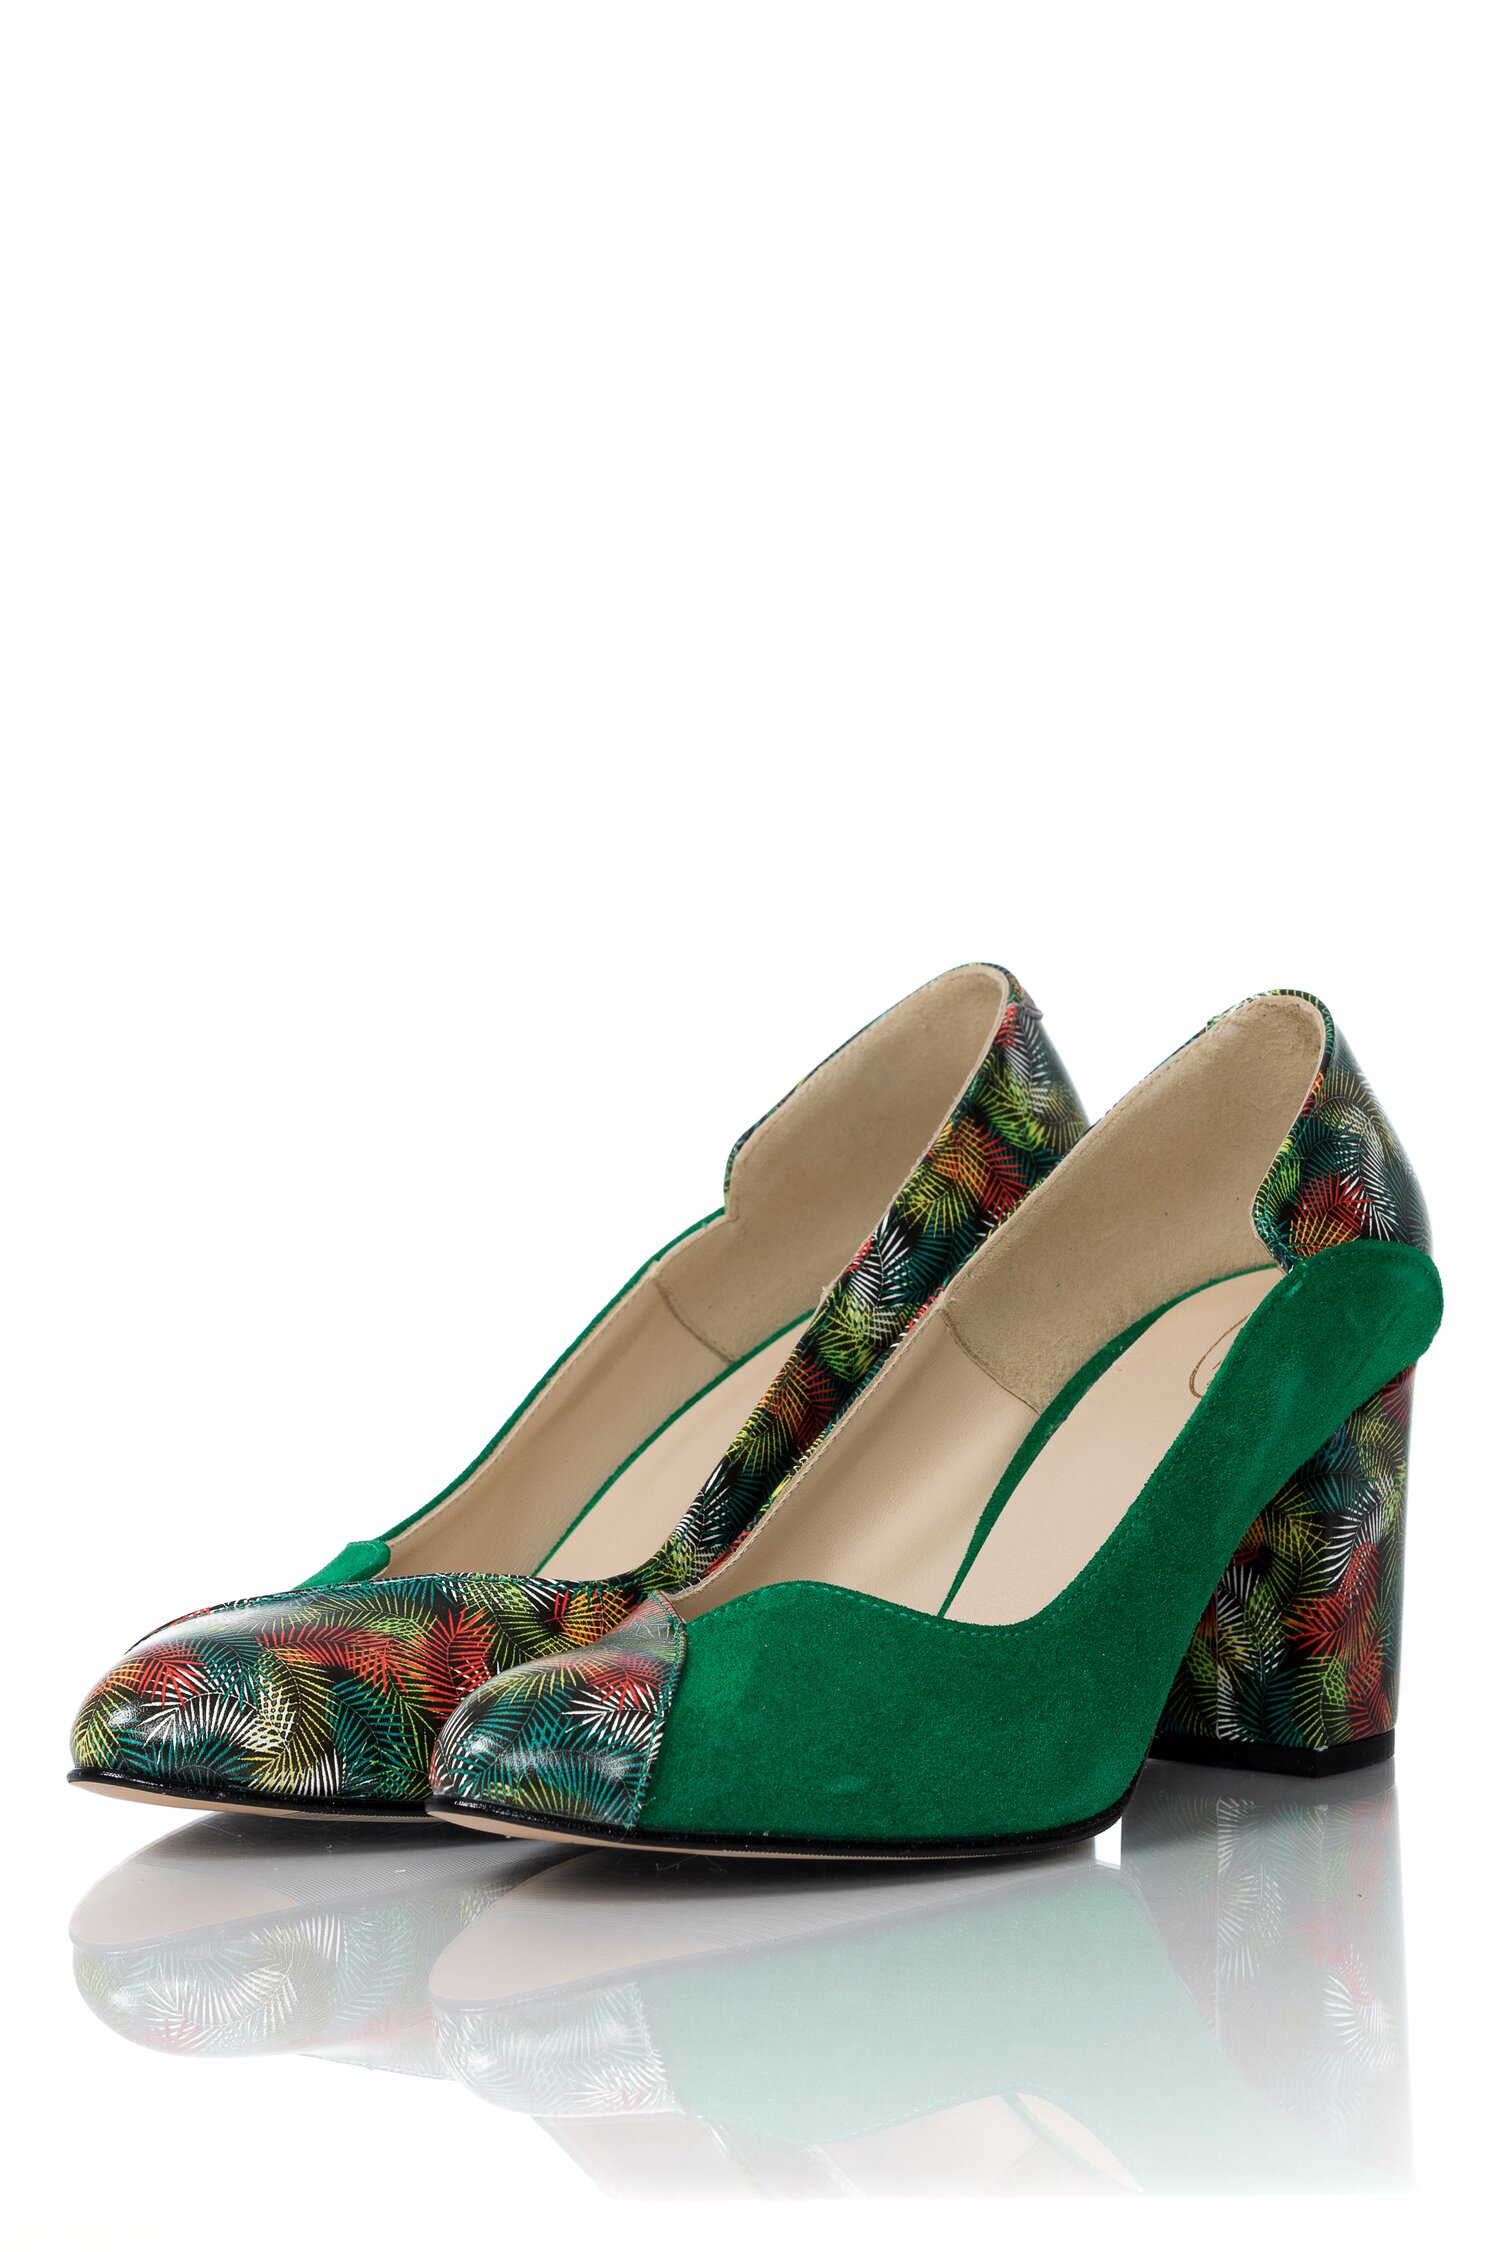 Pantofi Mara verzi cu imprimeu floral dyfashion.ro imagine 2022 13clothing.ro